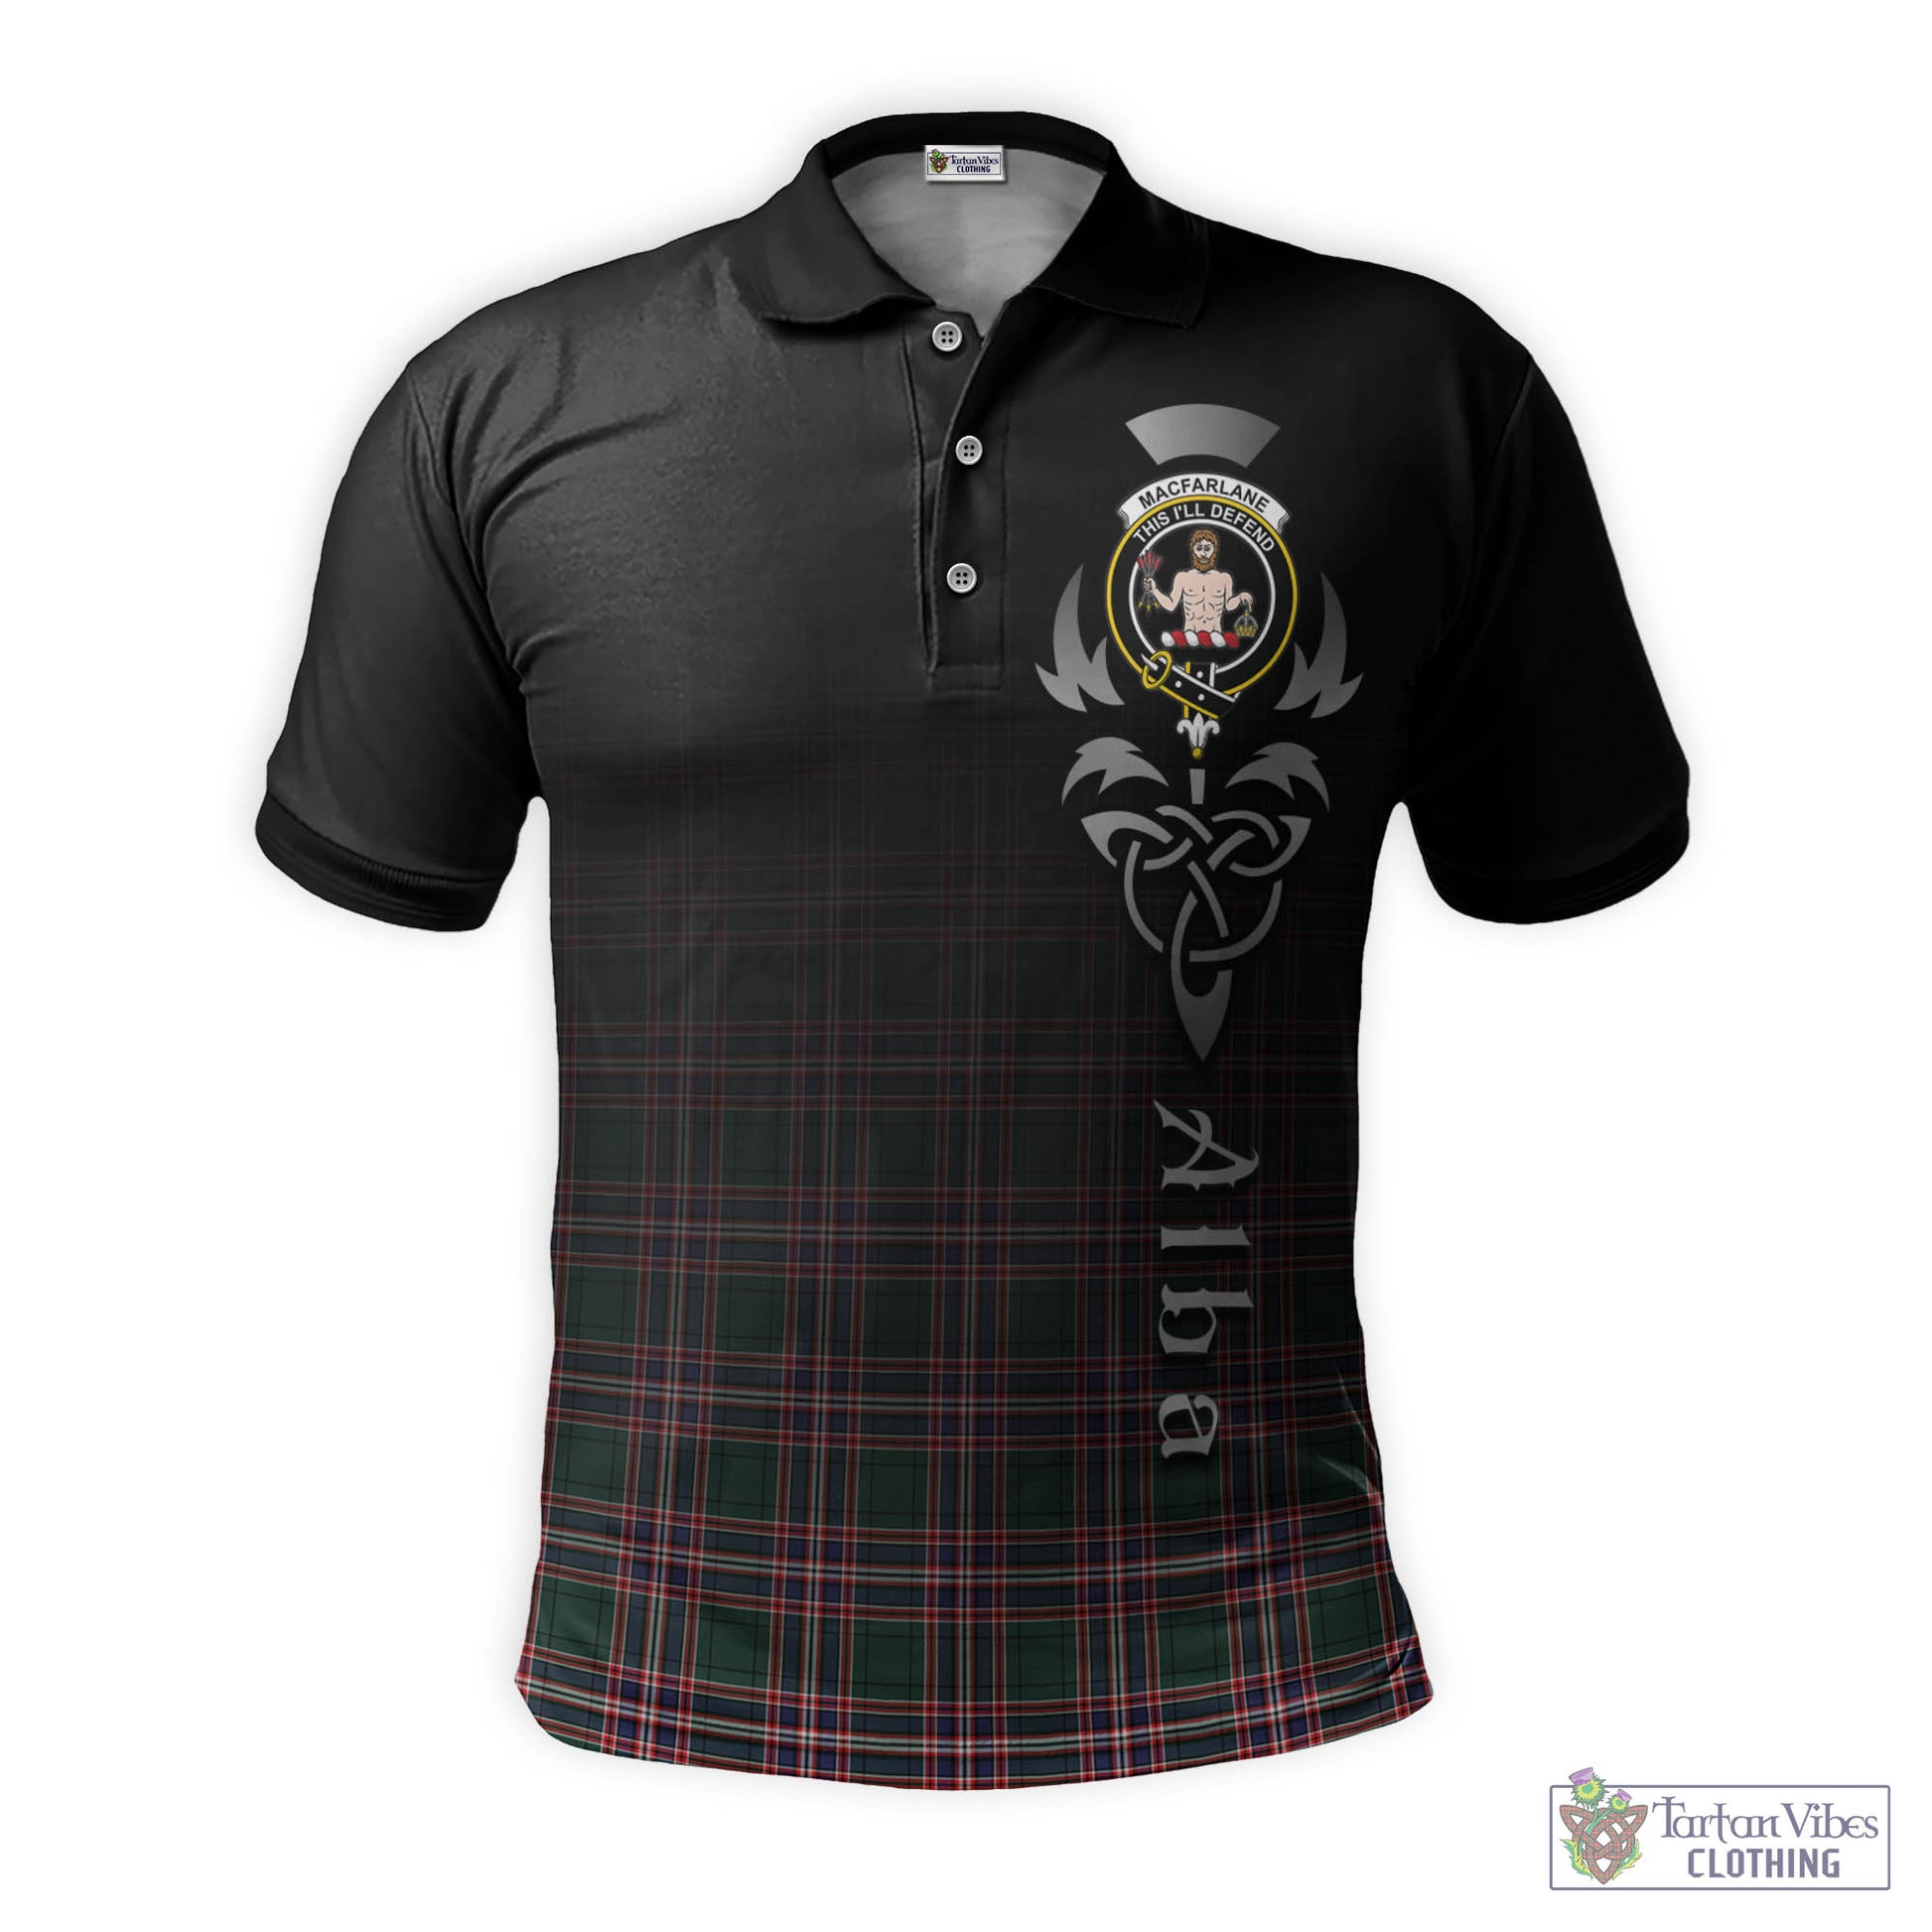 Tartan Vibes Clothing MacFarlane Hunting Modern Tartan Polo Shirt Featuring Alba Gu Brath Family Crest Celtic Inspired